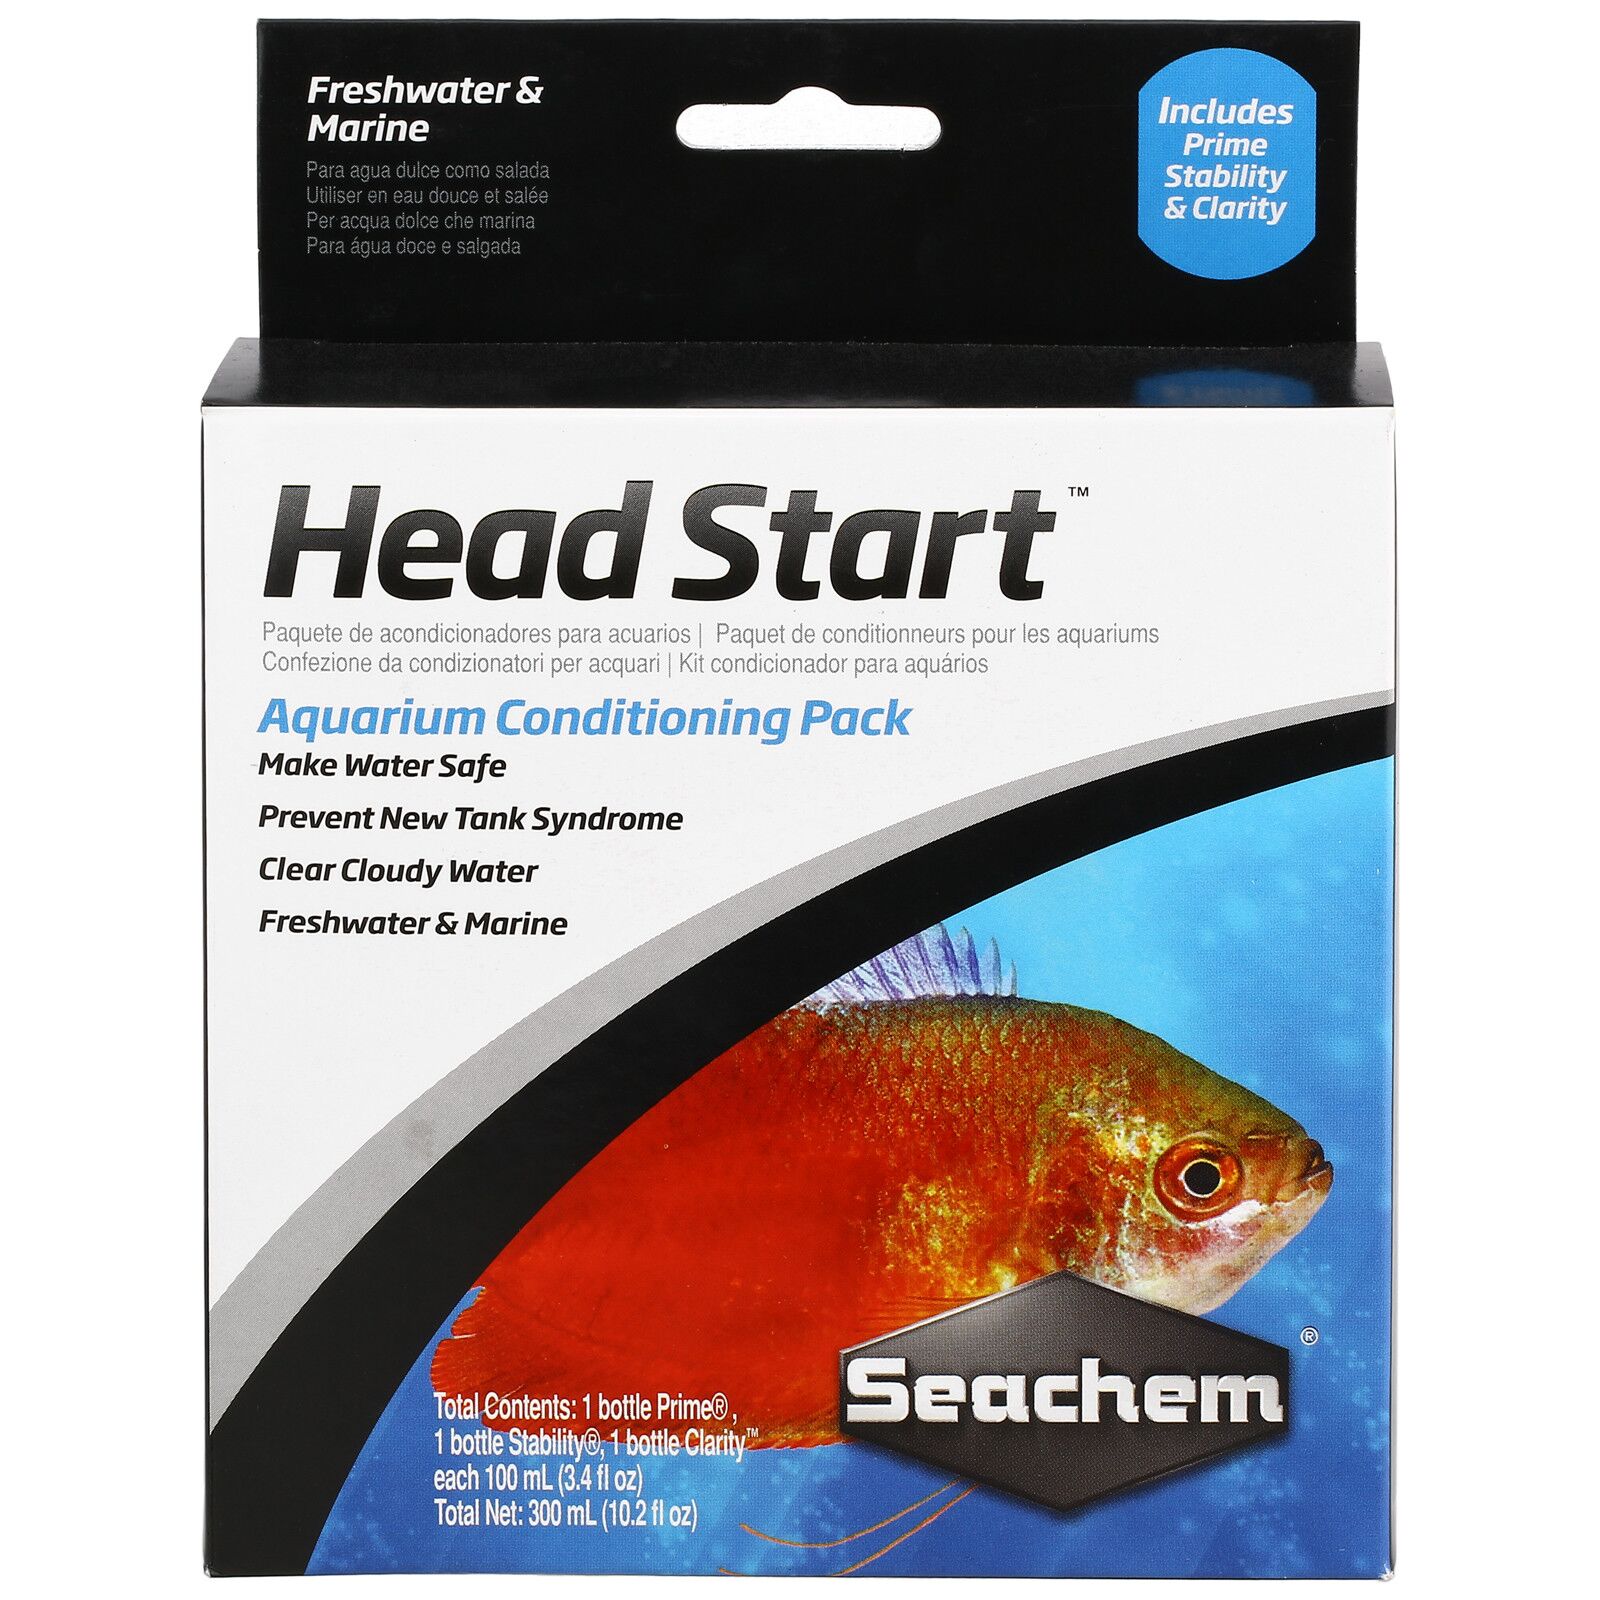 Seachem - Head Start - Prime, Stability &清晰